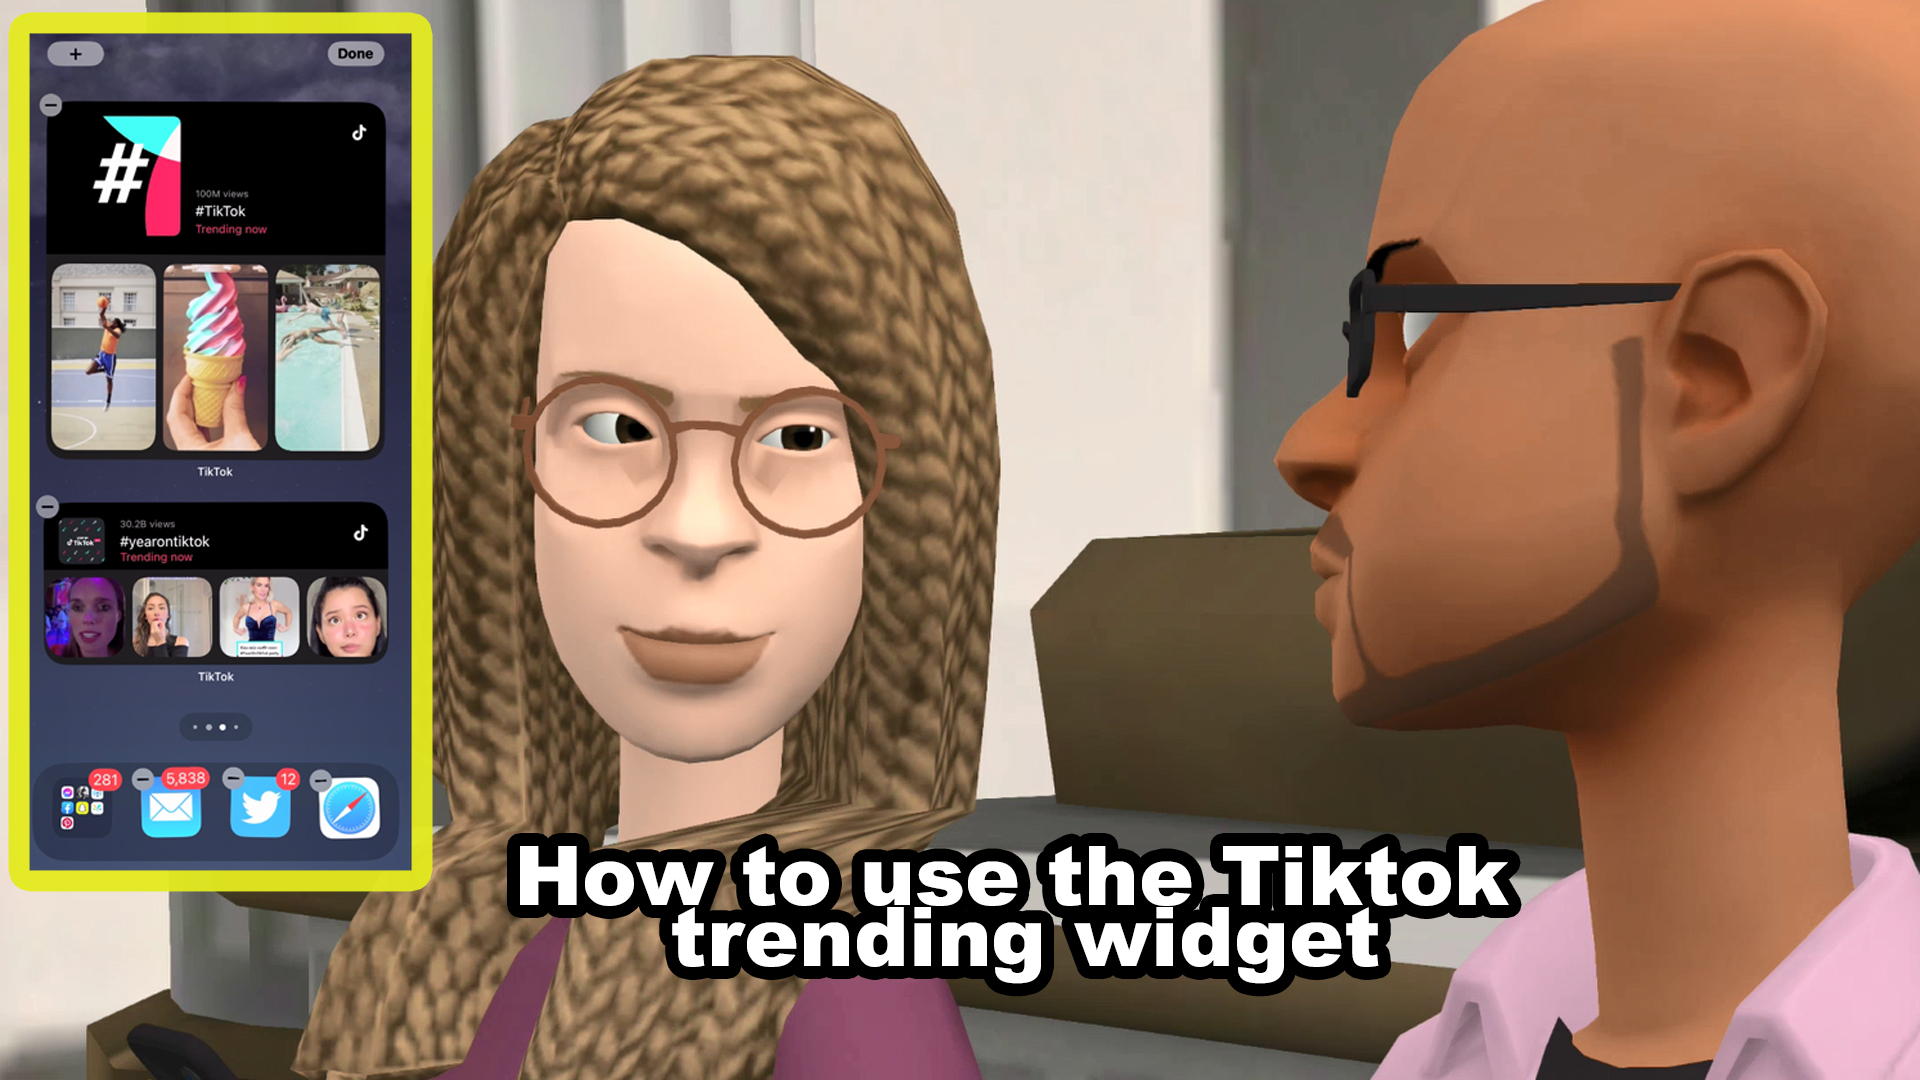 How to use the TikTok trending widget